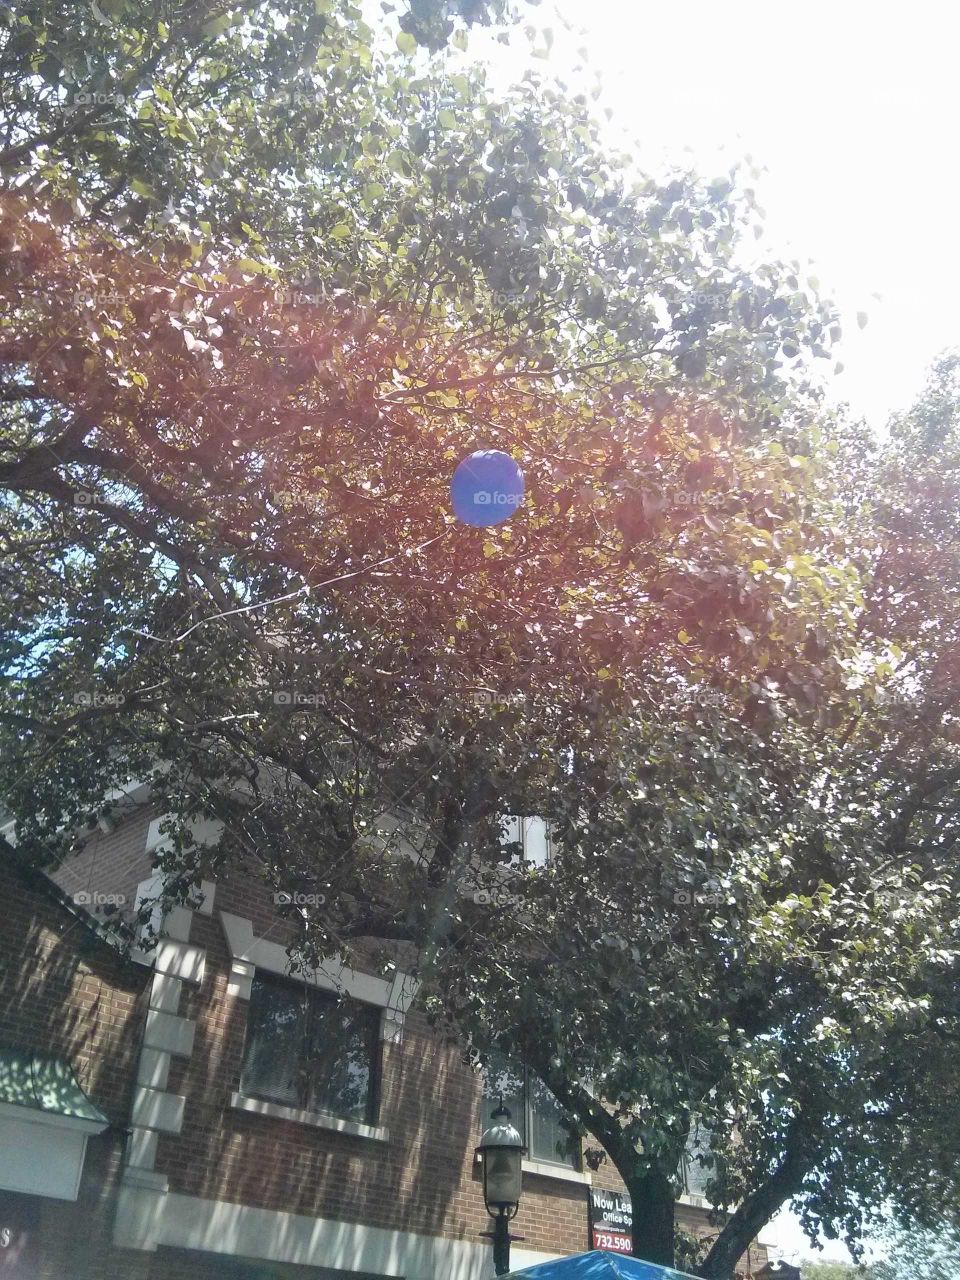 Poor Lost Blue Balloon